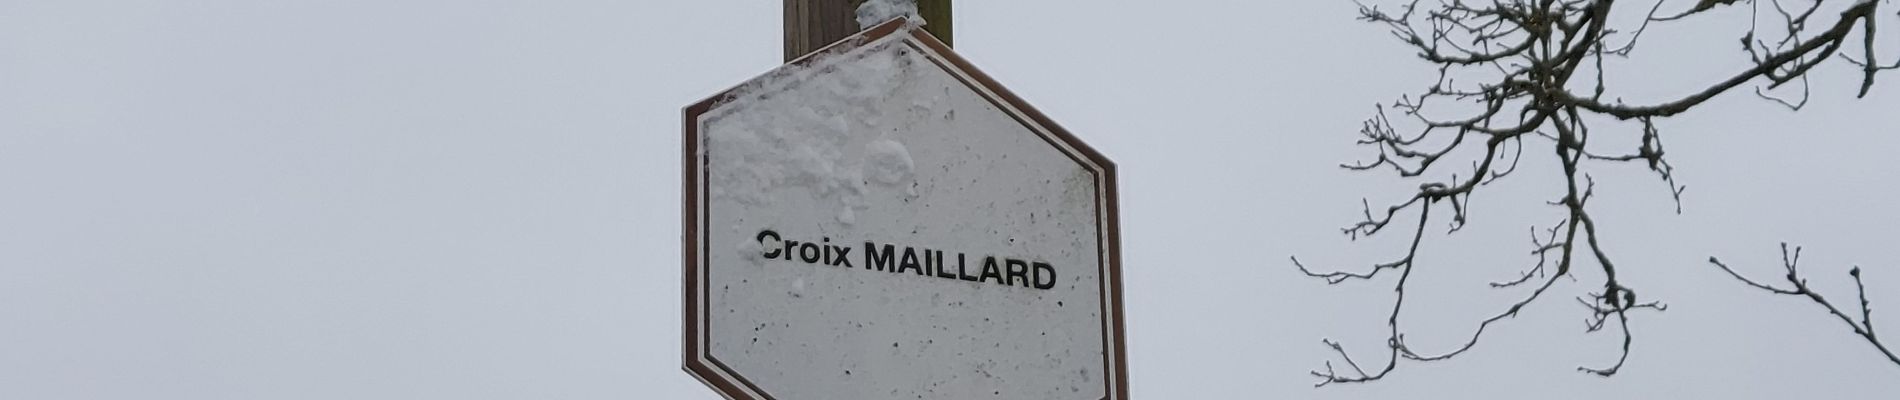 Trail Walking Havelange - Croix Maillard Nettine 090221 - Photo